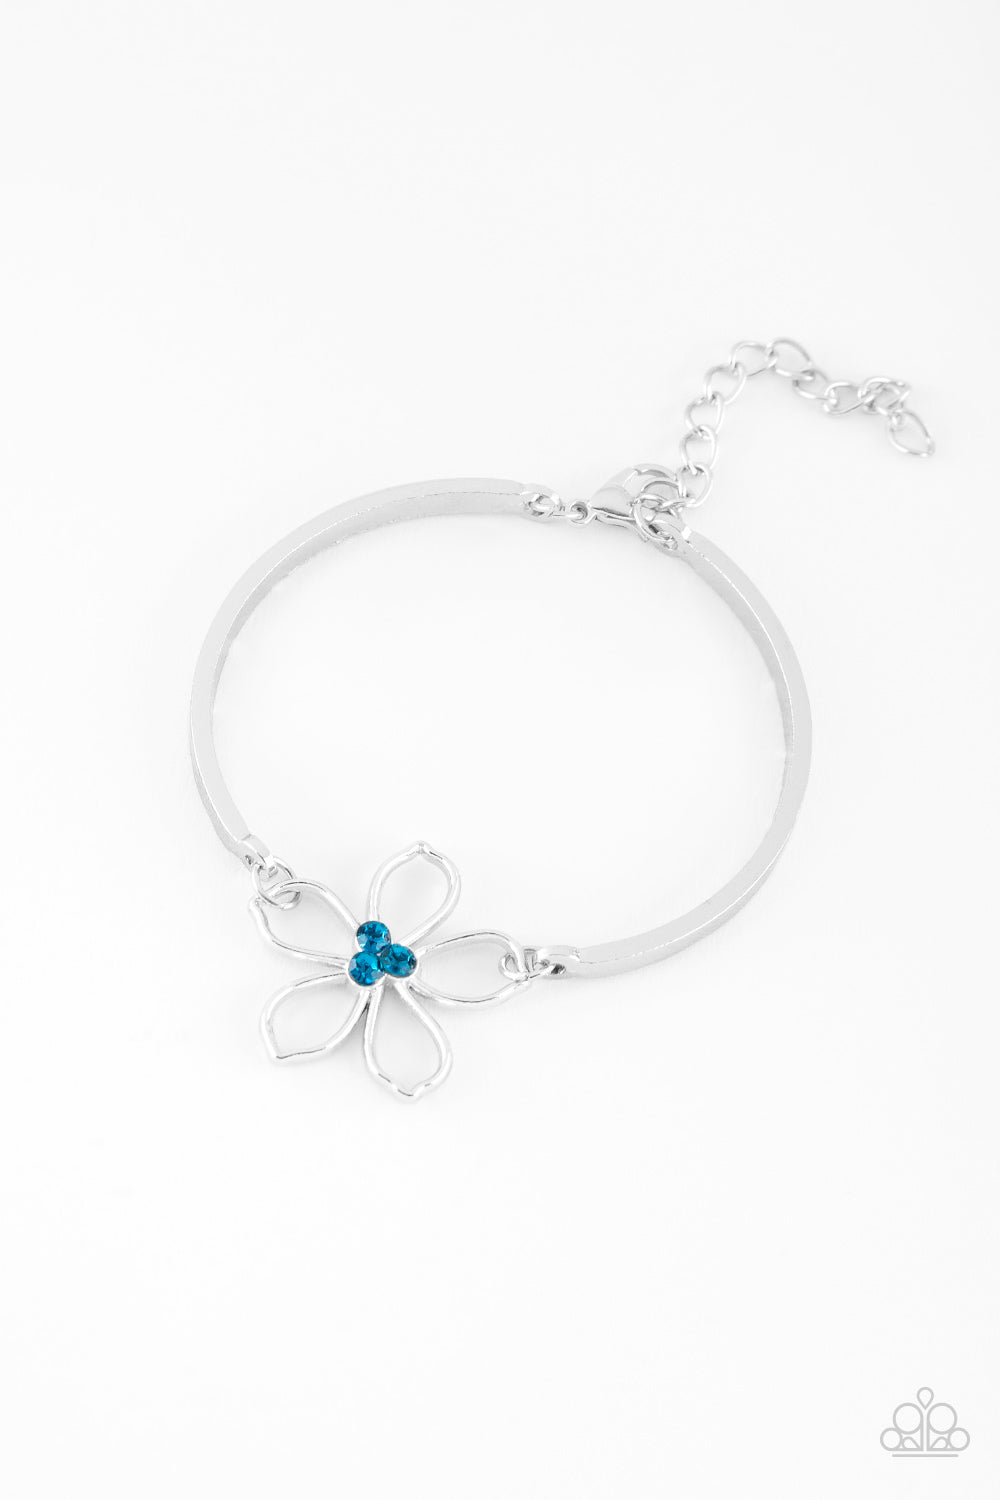 Hibiscus Hipster - Blue Bracelet freeshipping - JewLz4u Gemstone Gallery